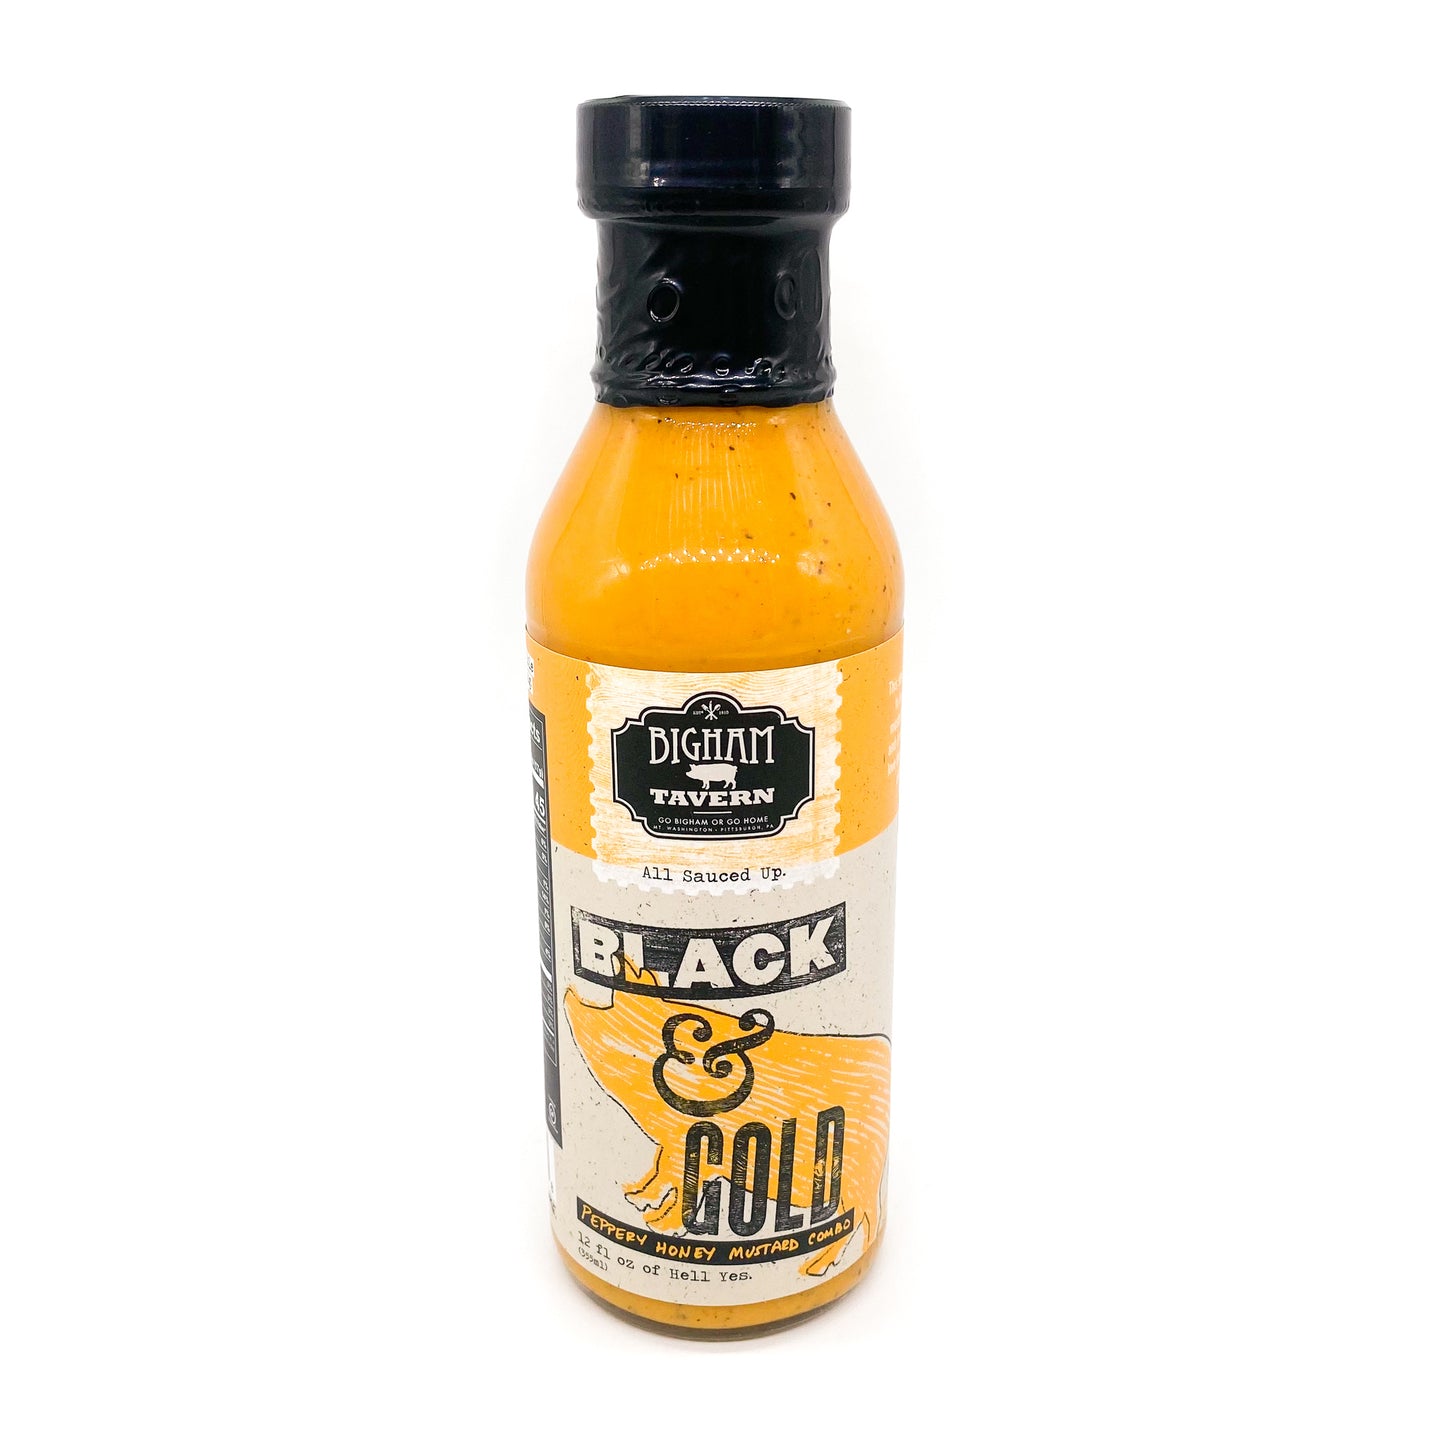 Black & Gold Sauce